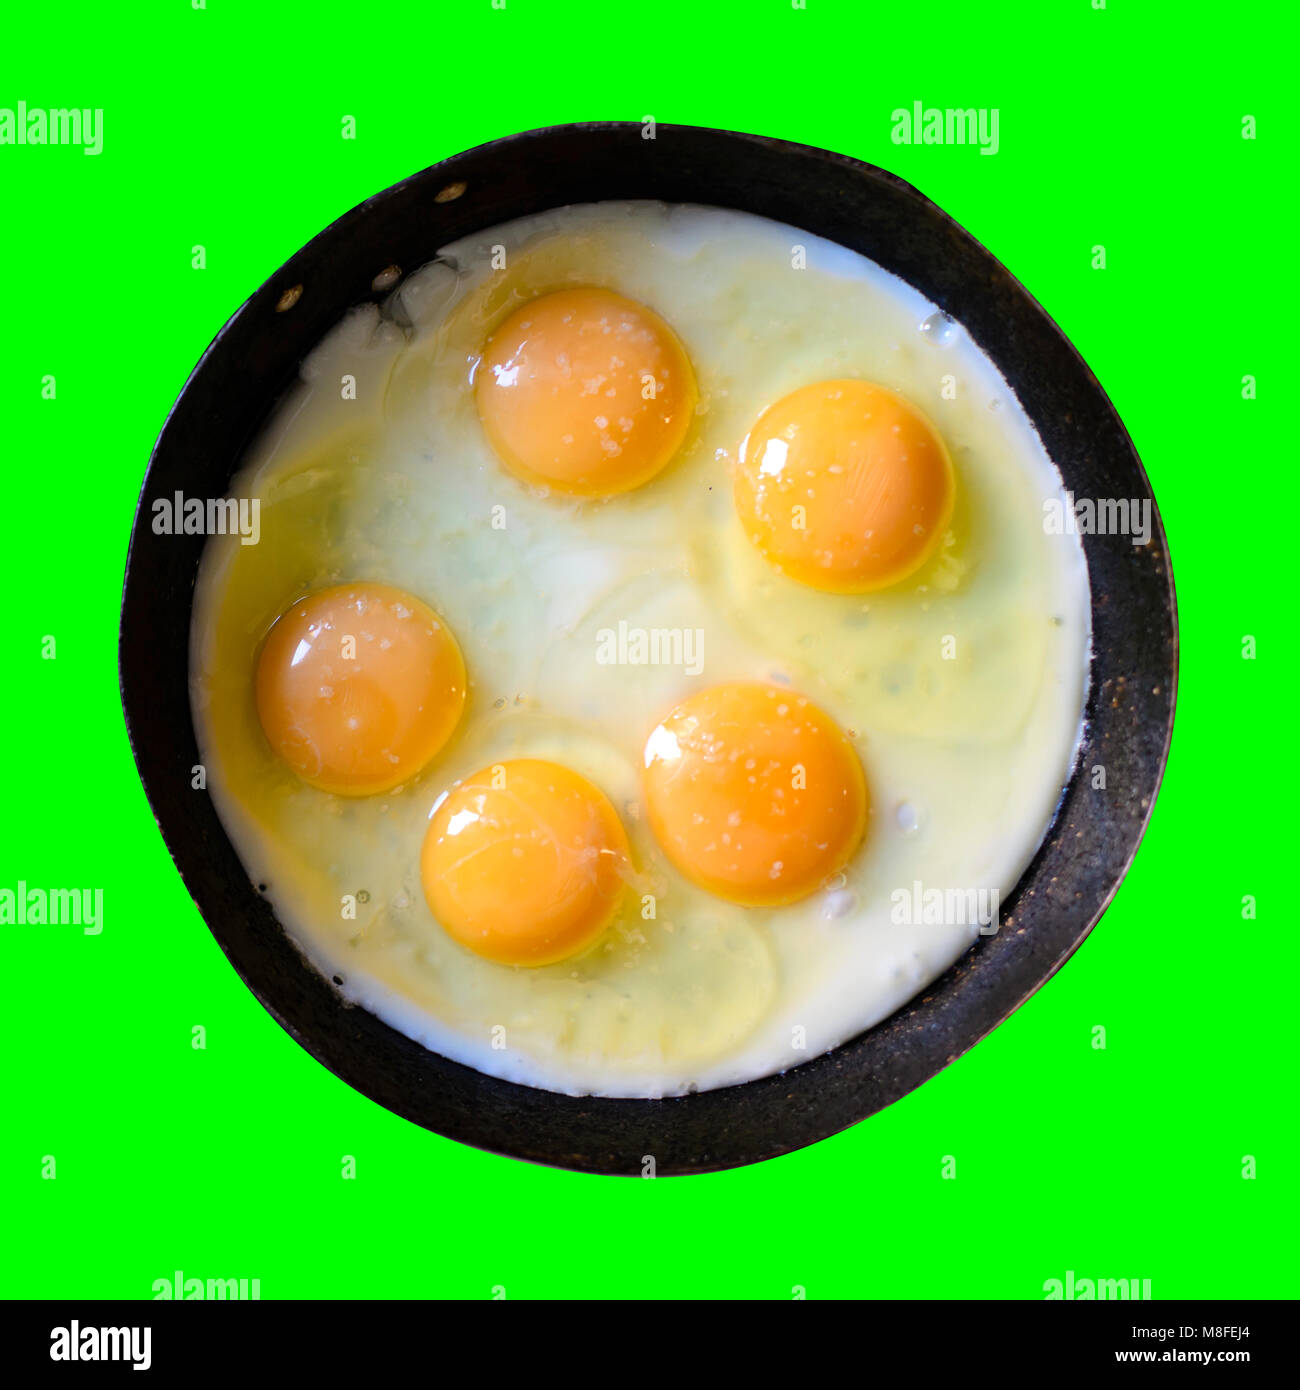 https://c8.alamy.com/comp/M8FEJ4/tasty-fried-eggs-in-a-cast-iron-frying-pan-isolated-on-green-food-M8FEJ4.jpg